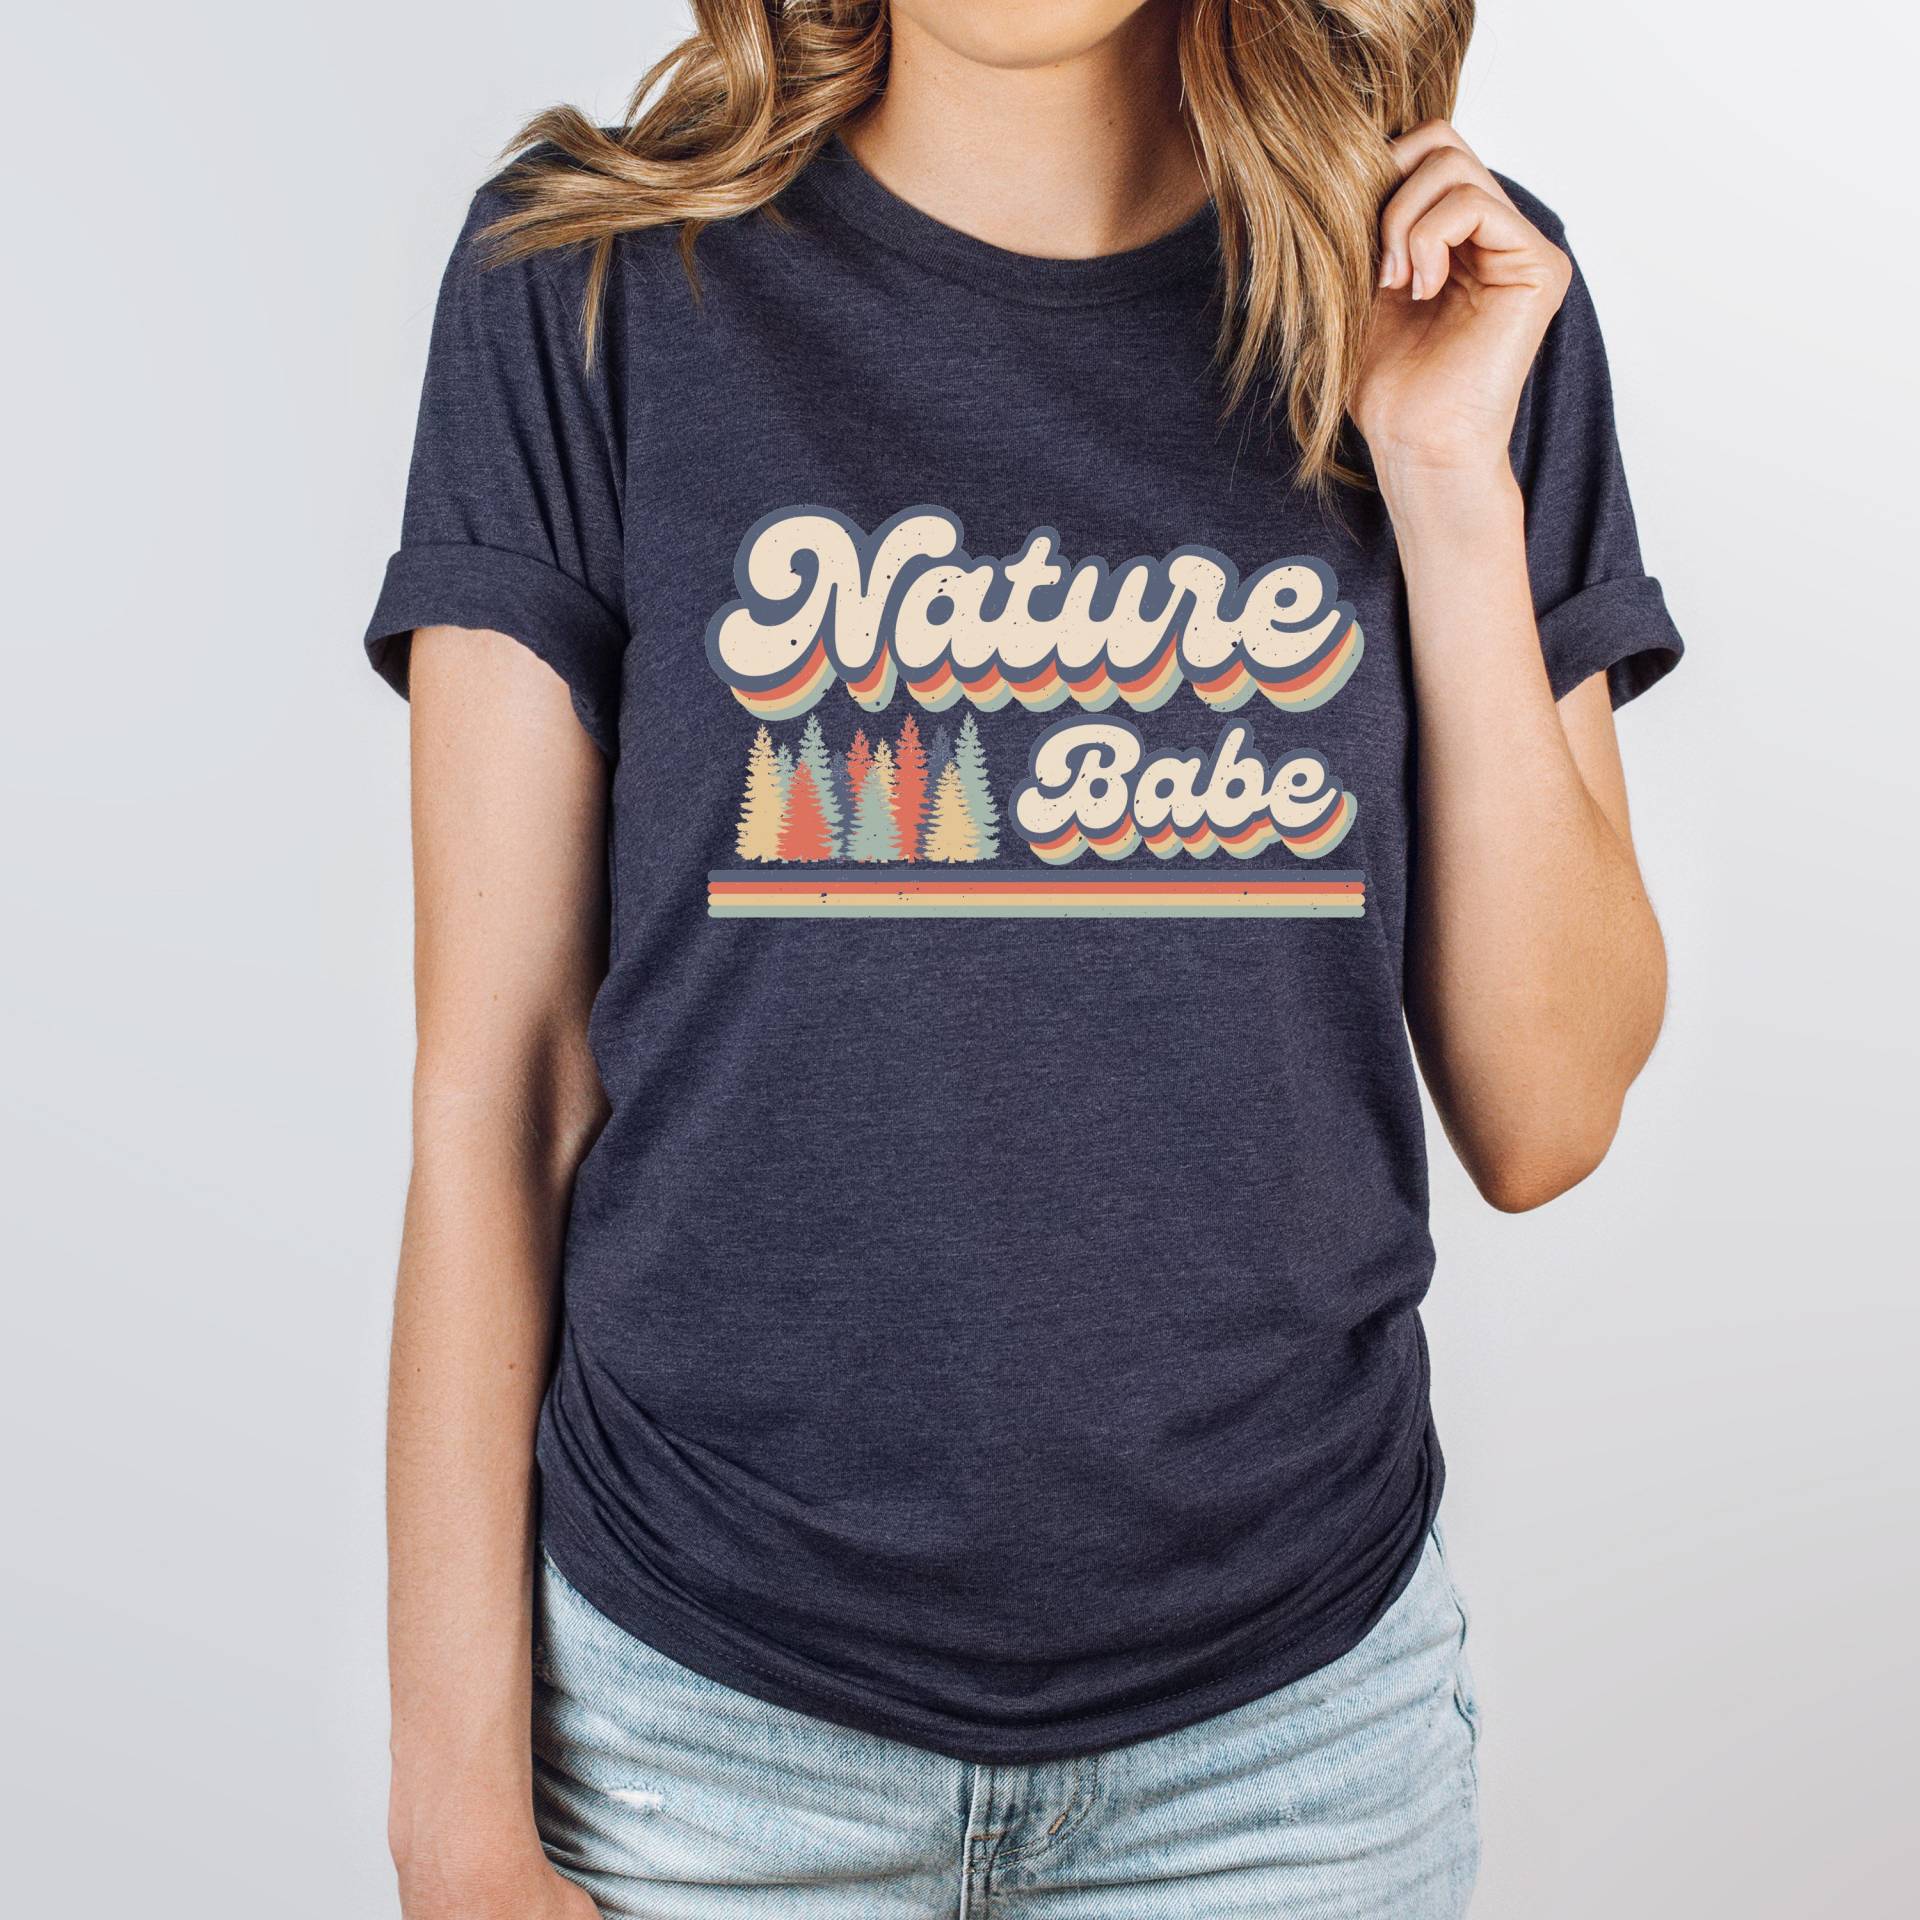 Nature Babe T-Shirt, Frauen-Wander-T-Shirts, Camping-Shirts Für Sie, Retro-Wander-T-Shirts, Frauen-Retro-T-Shirts, Natur-Shirts von IntoThePinesDesign